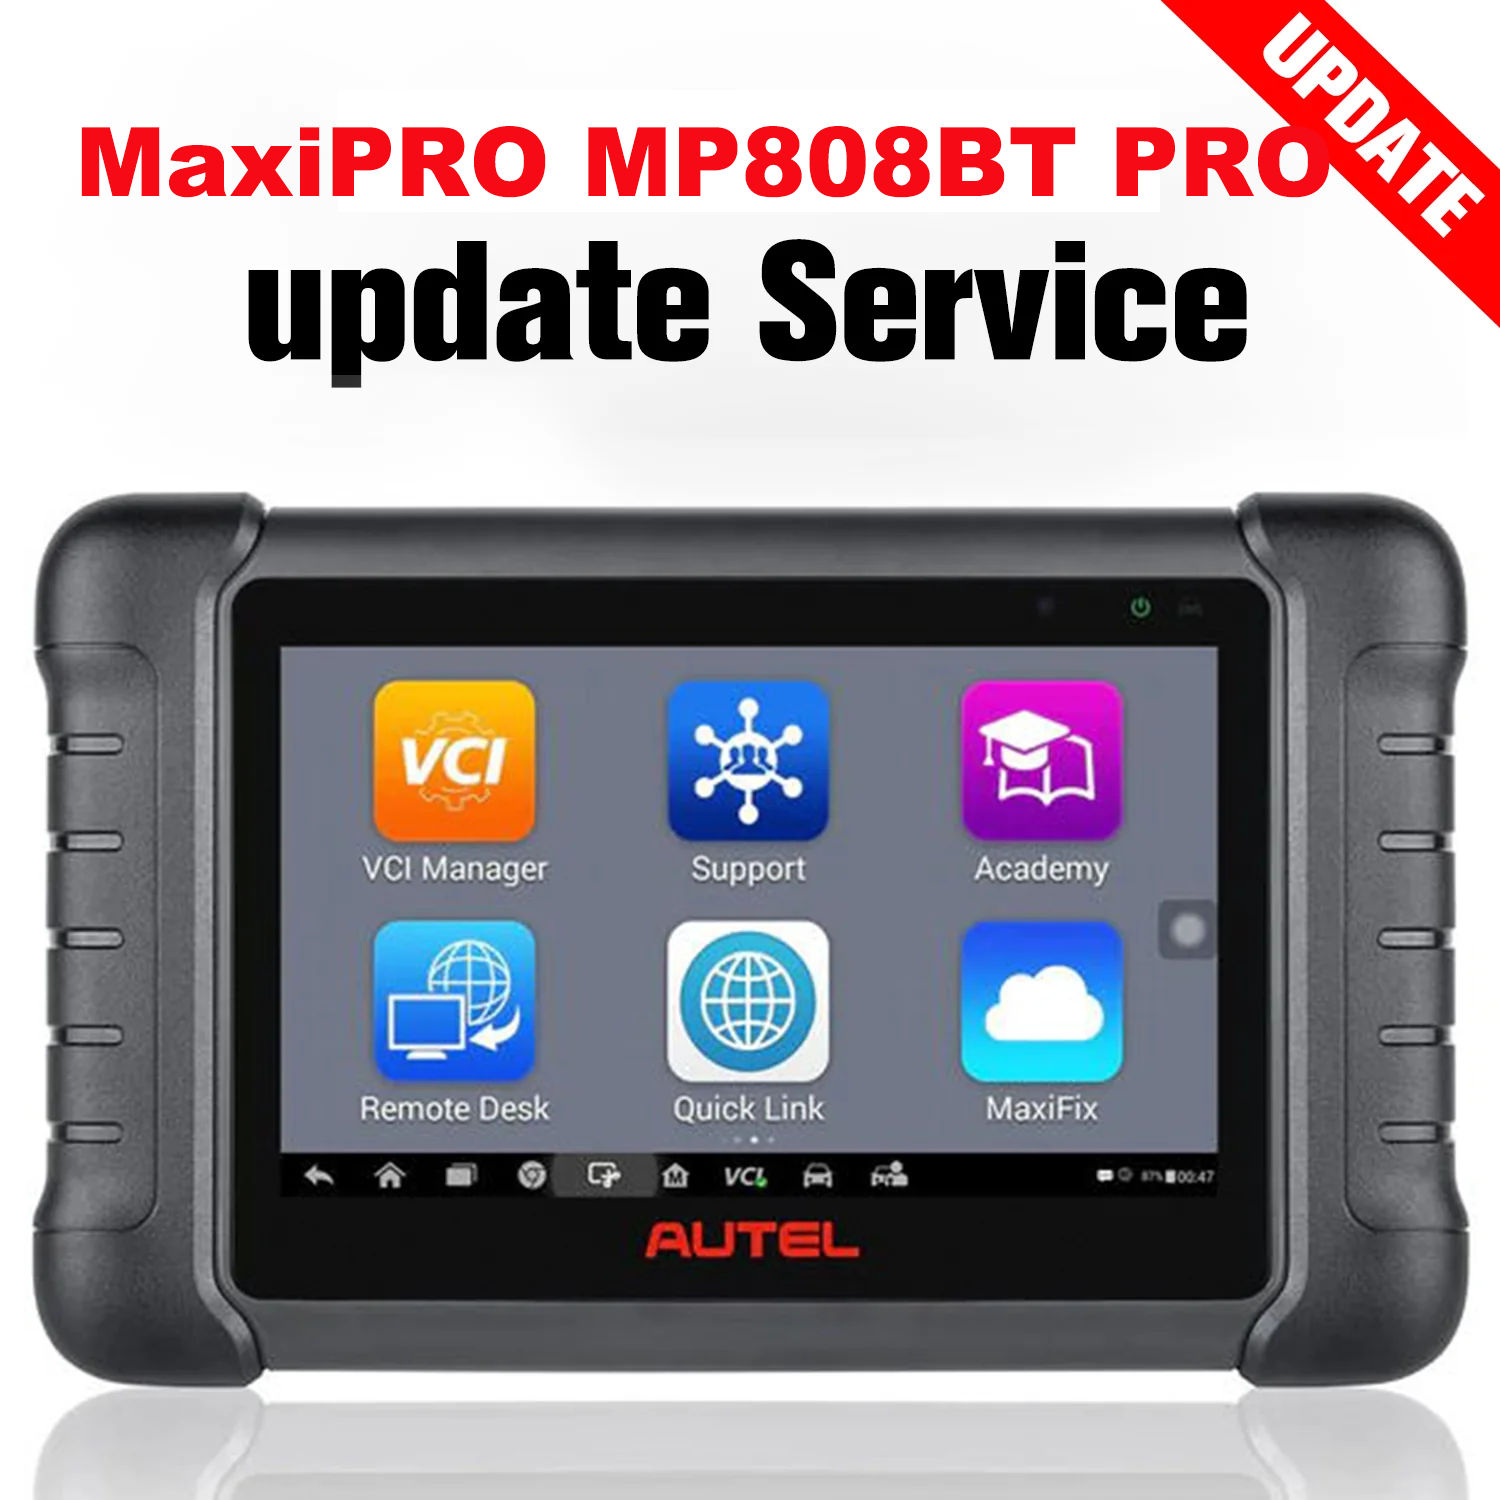 maxipro mp808bt pro update service